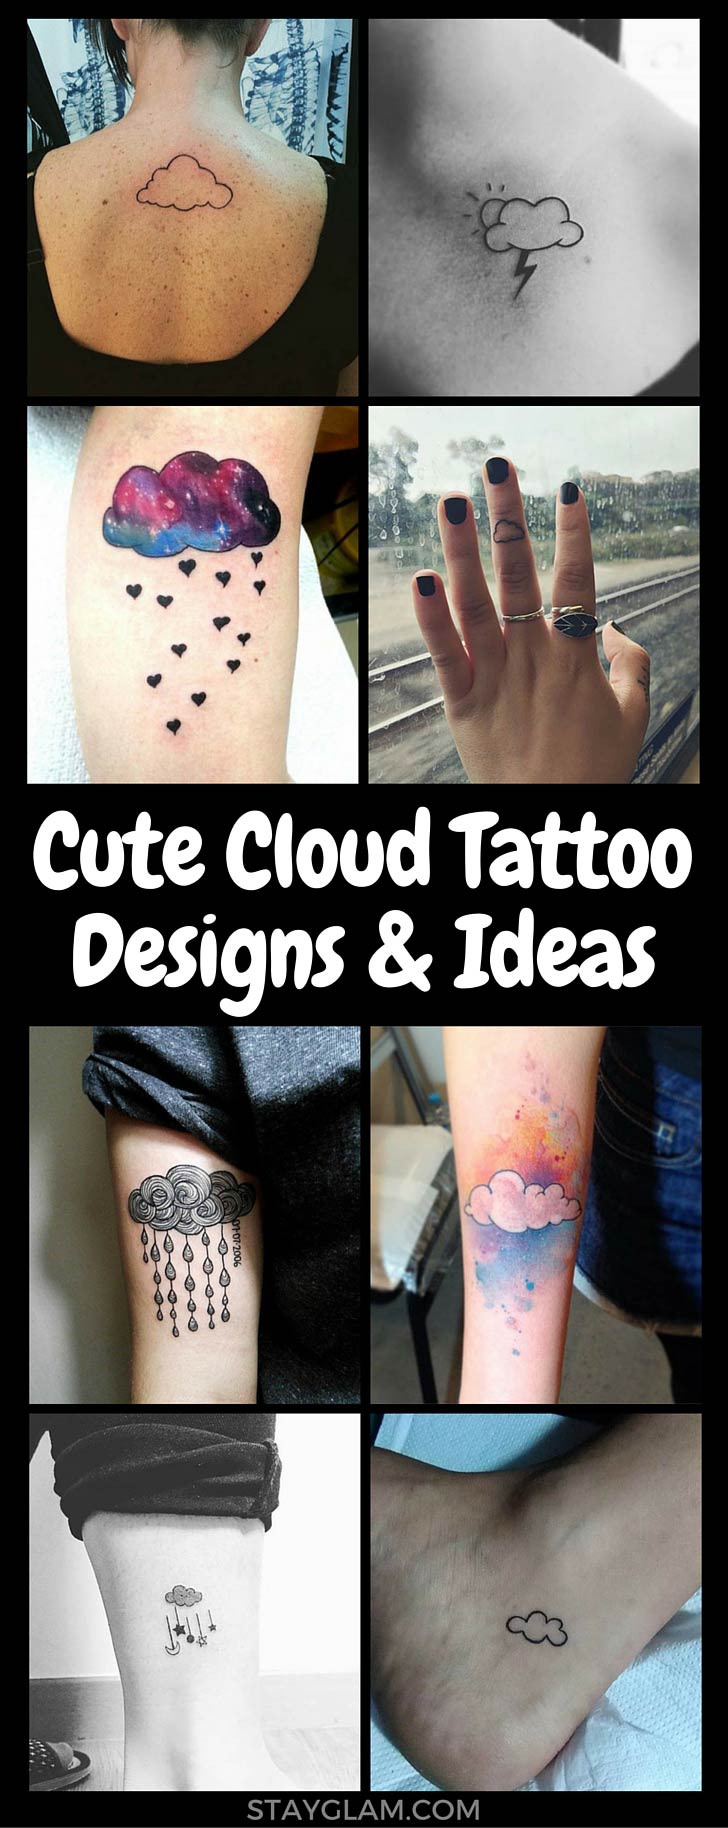 Cute Cloud Tattoo Designs and Ideas